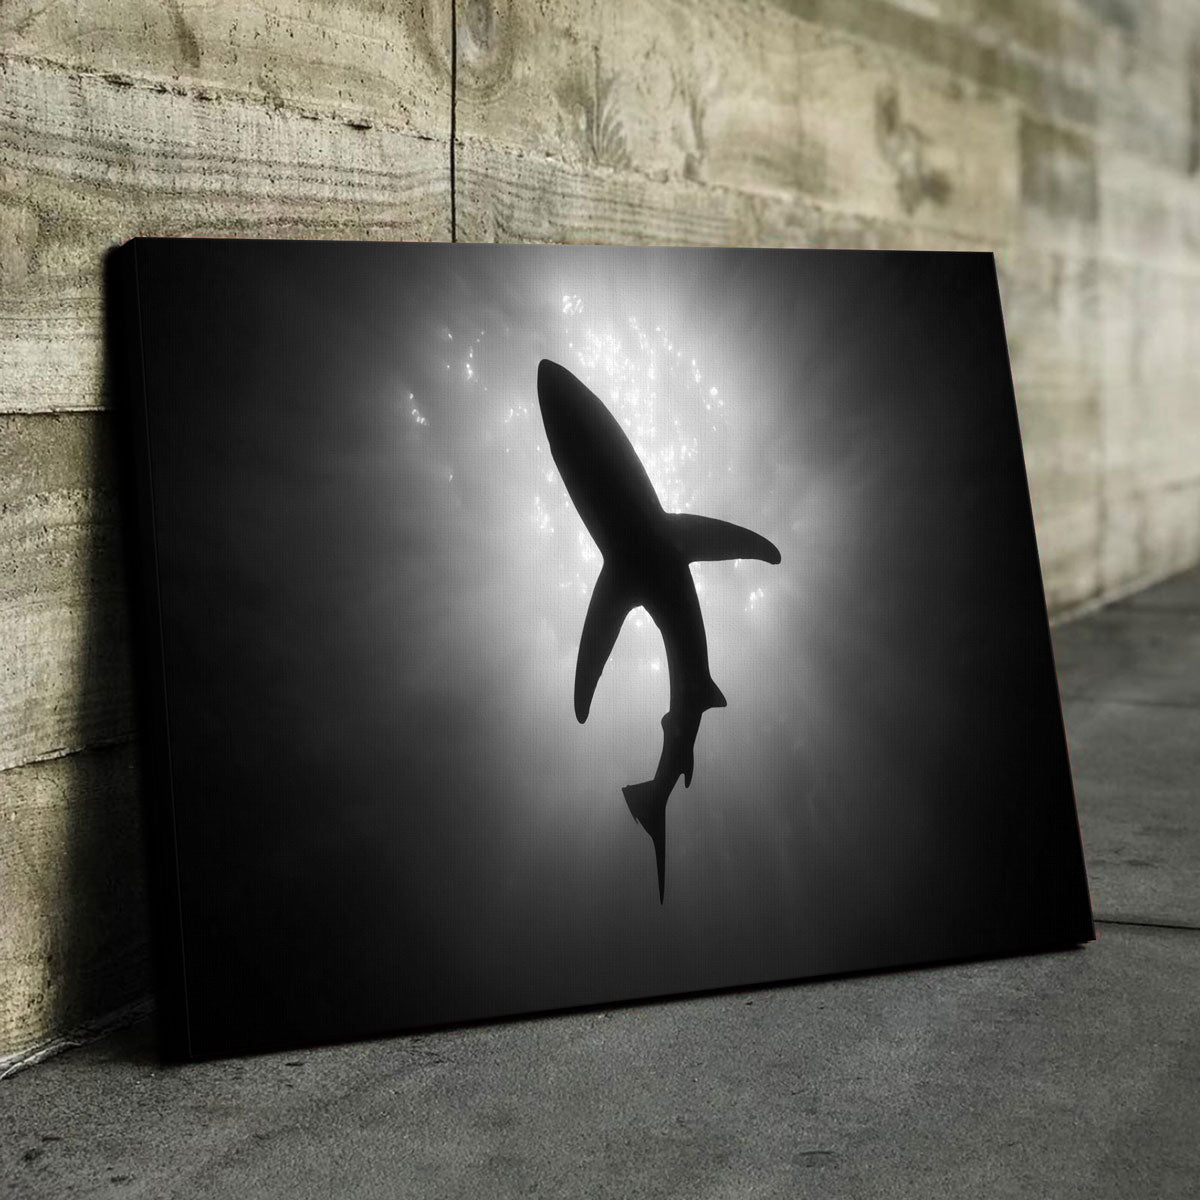 Shark Silhouette Canvas Set